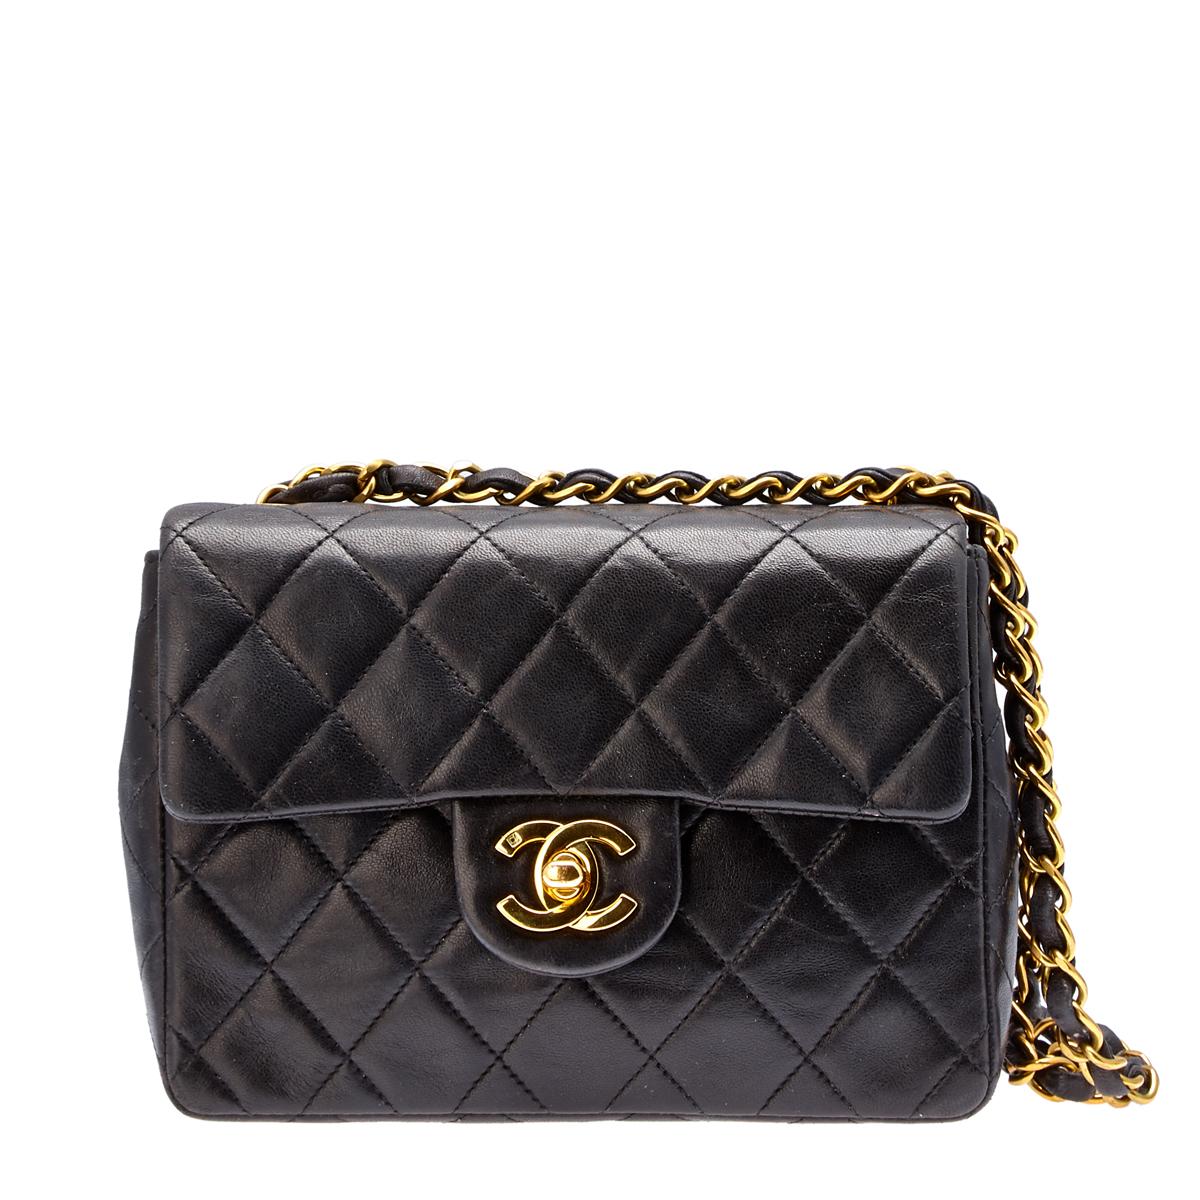 Chanel Classic Handbag Price Increase Font